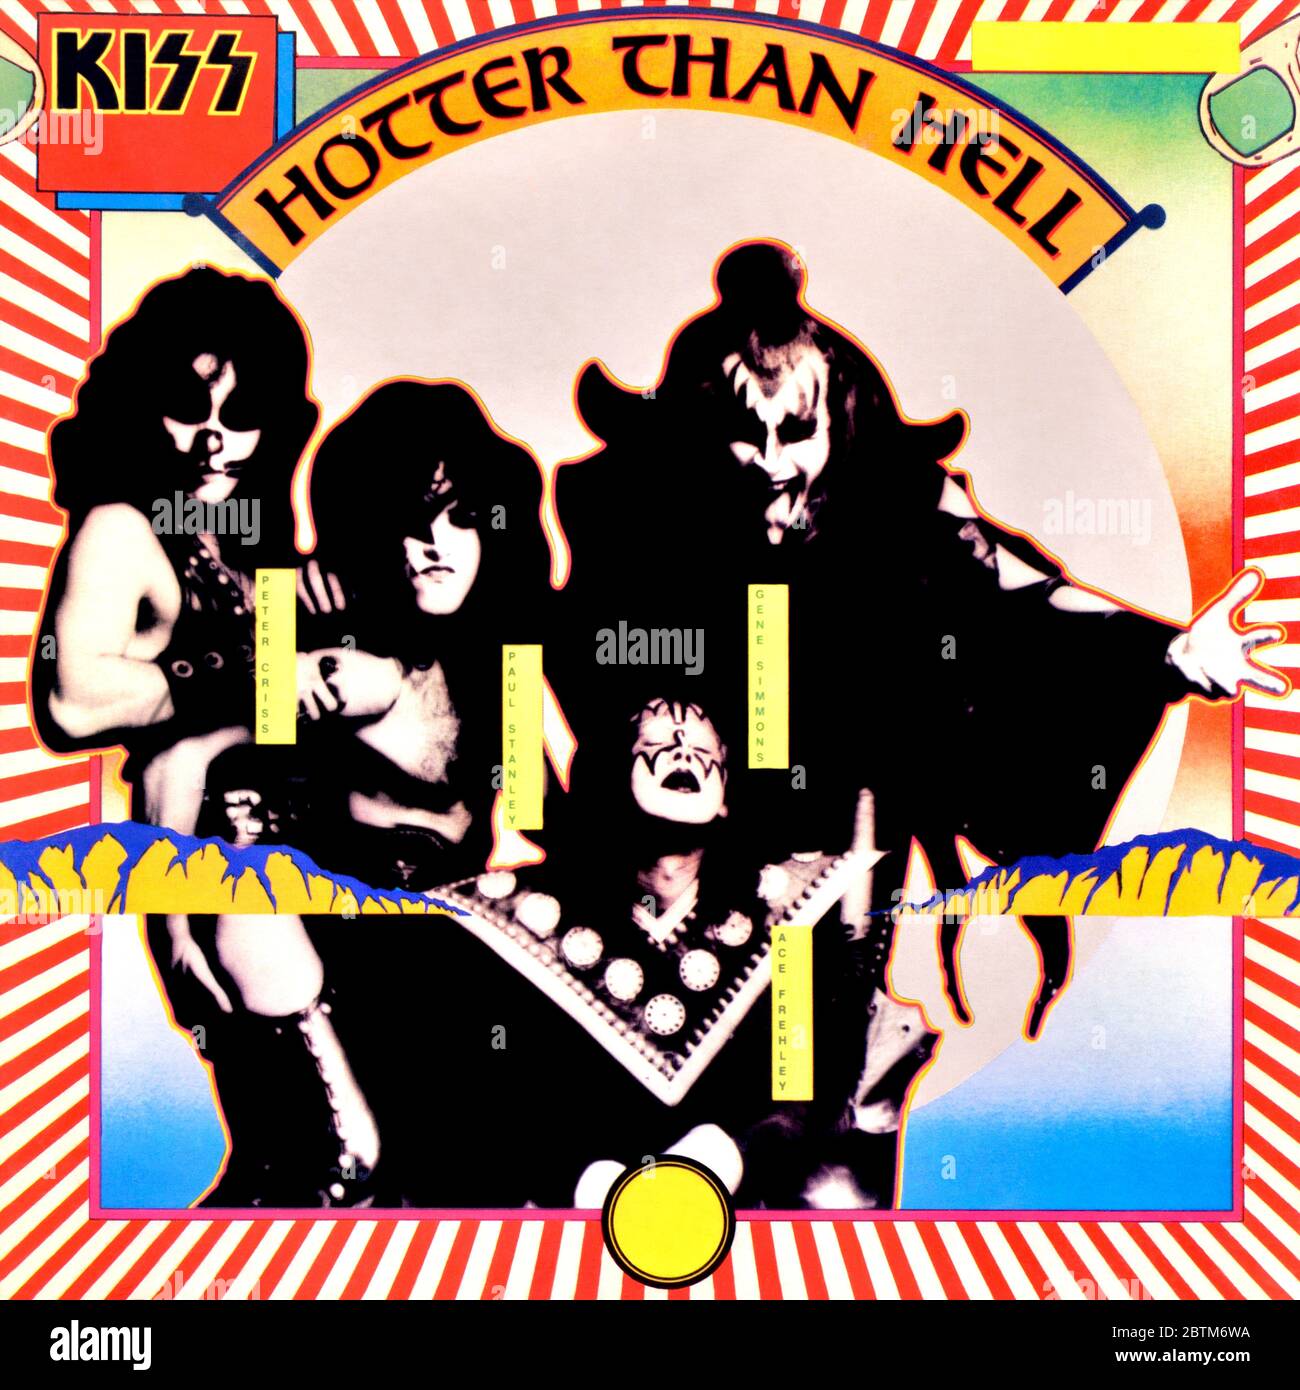 Kiss - original Vinyl Album Cover - Hotter Than Hell - 1974 Stockfoto